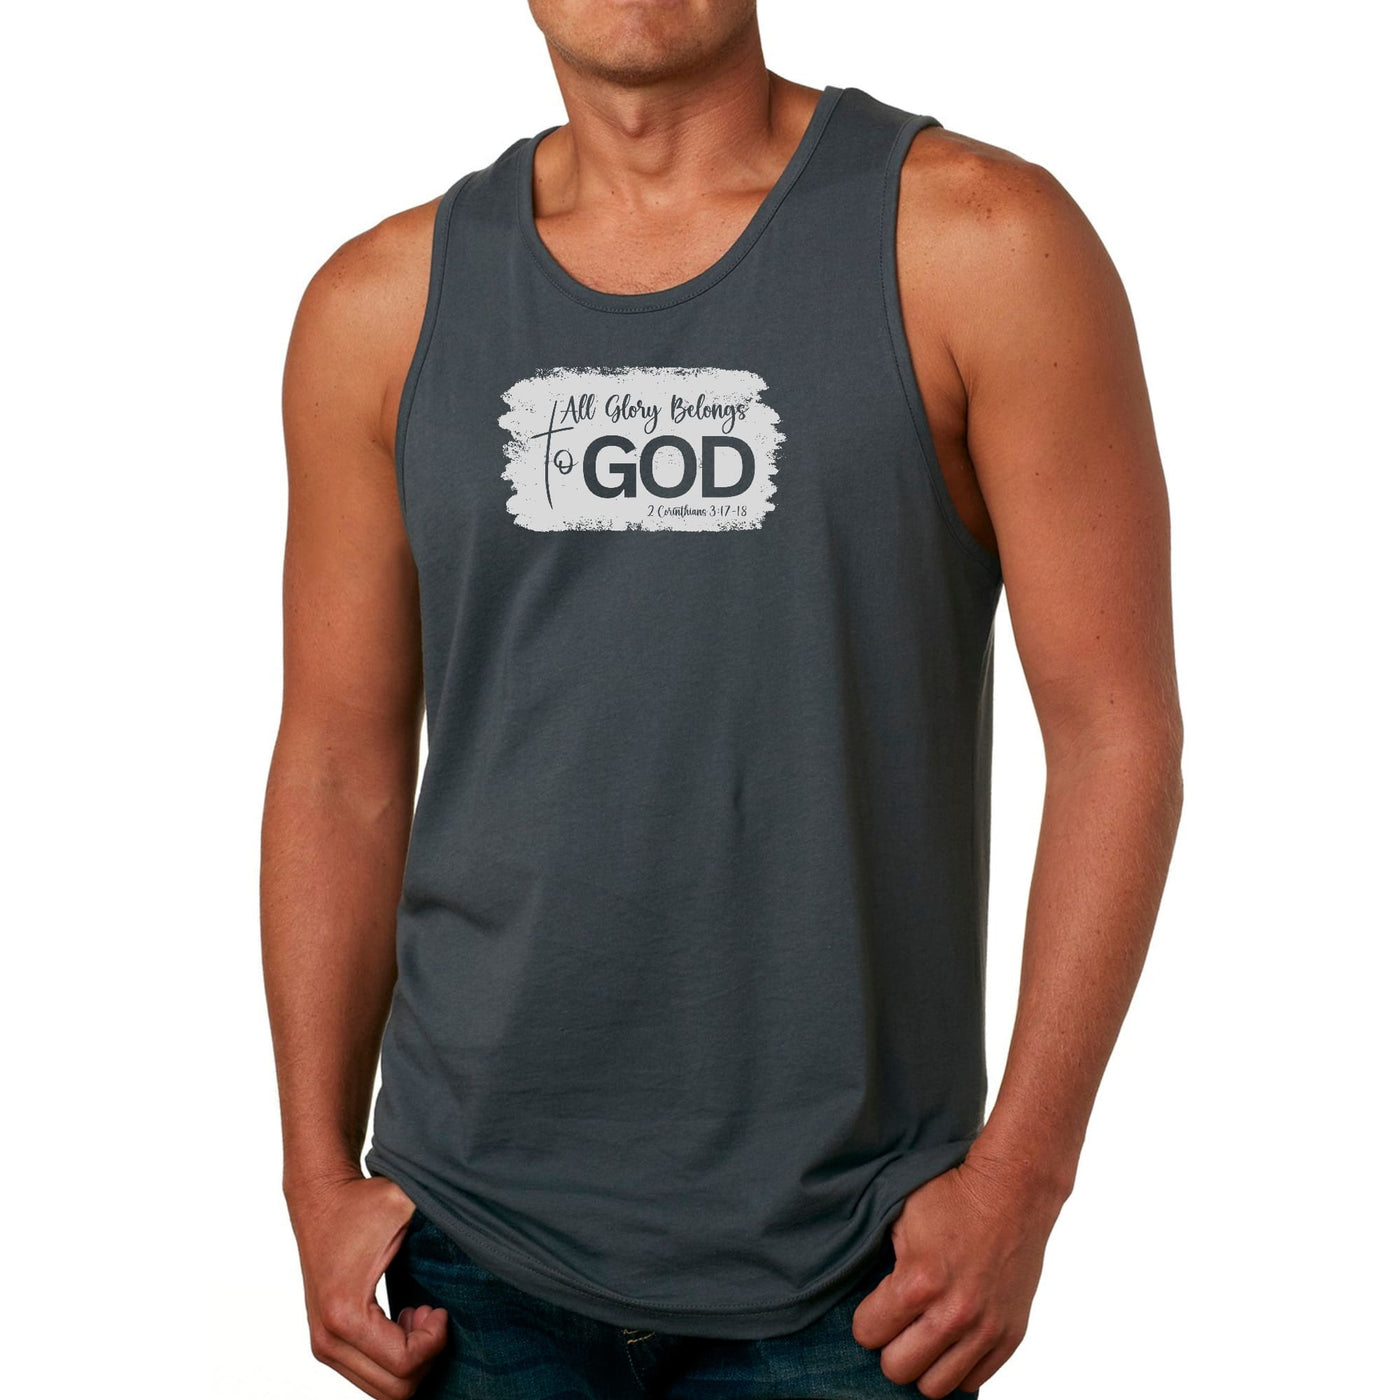 Mens Fitness Tank Top Graphic T-shirt All Glory Belongs To God - Mens | Tank